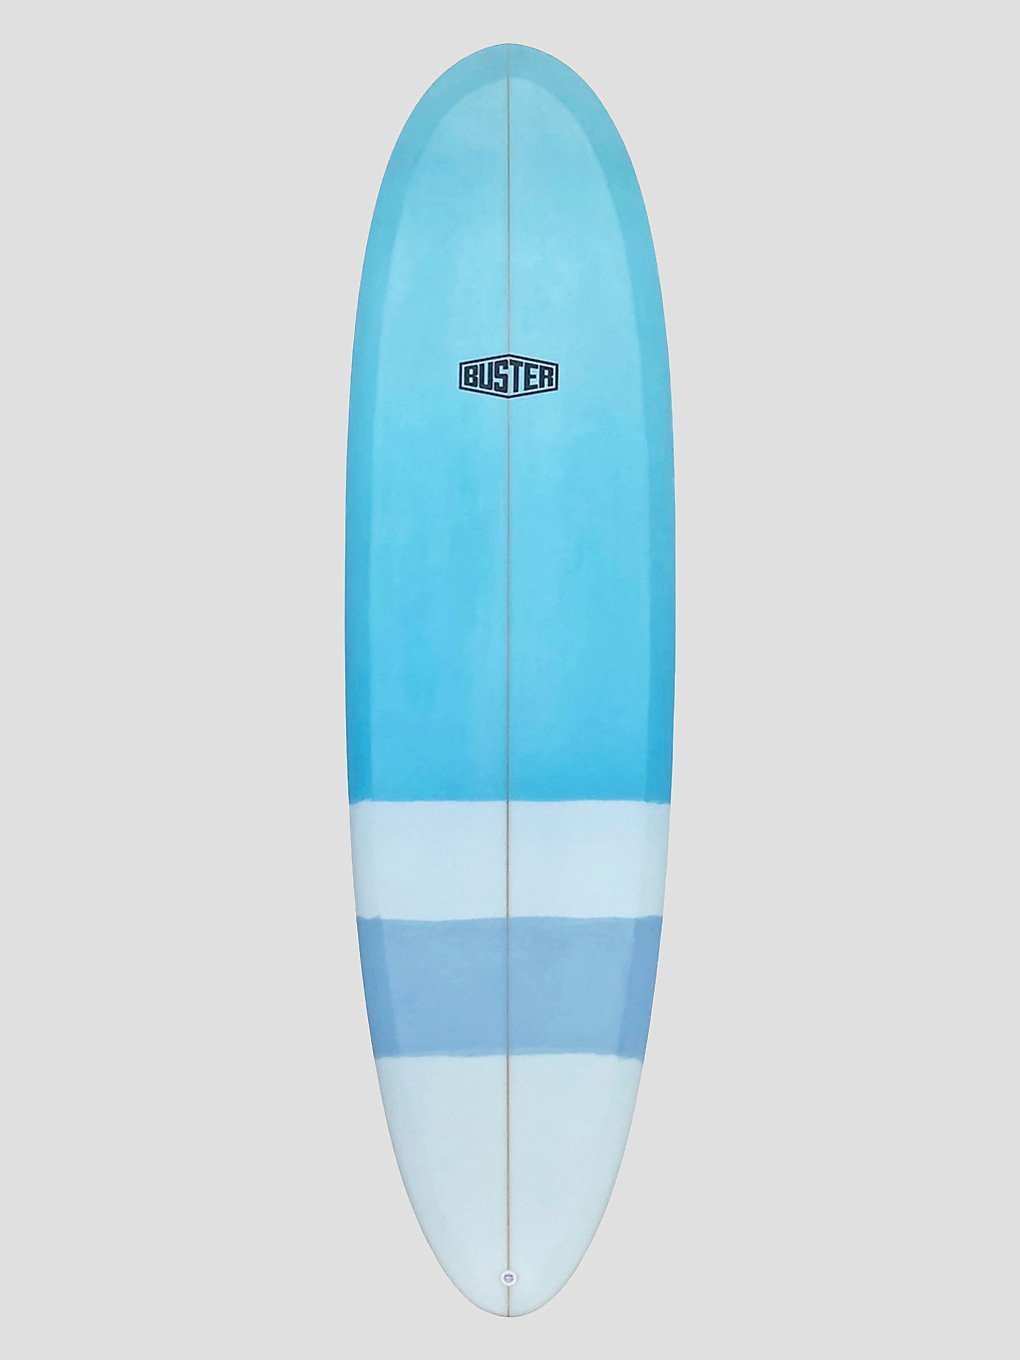 buster 72 magic glider surfboard blau weiss/blau